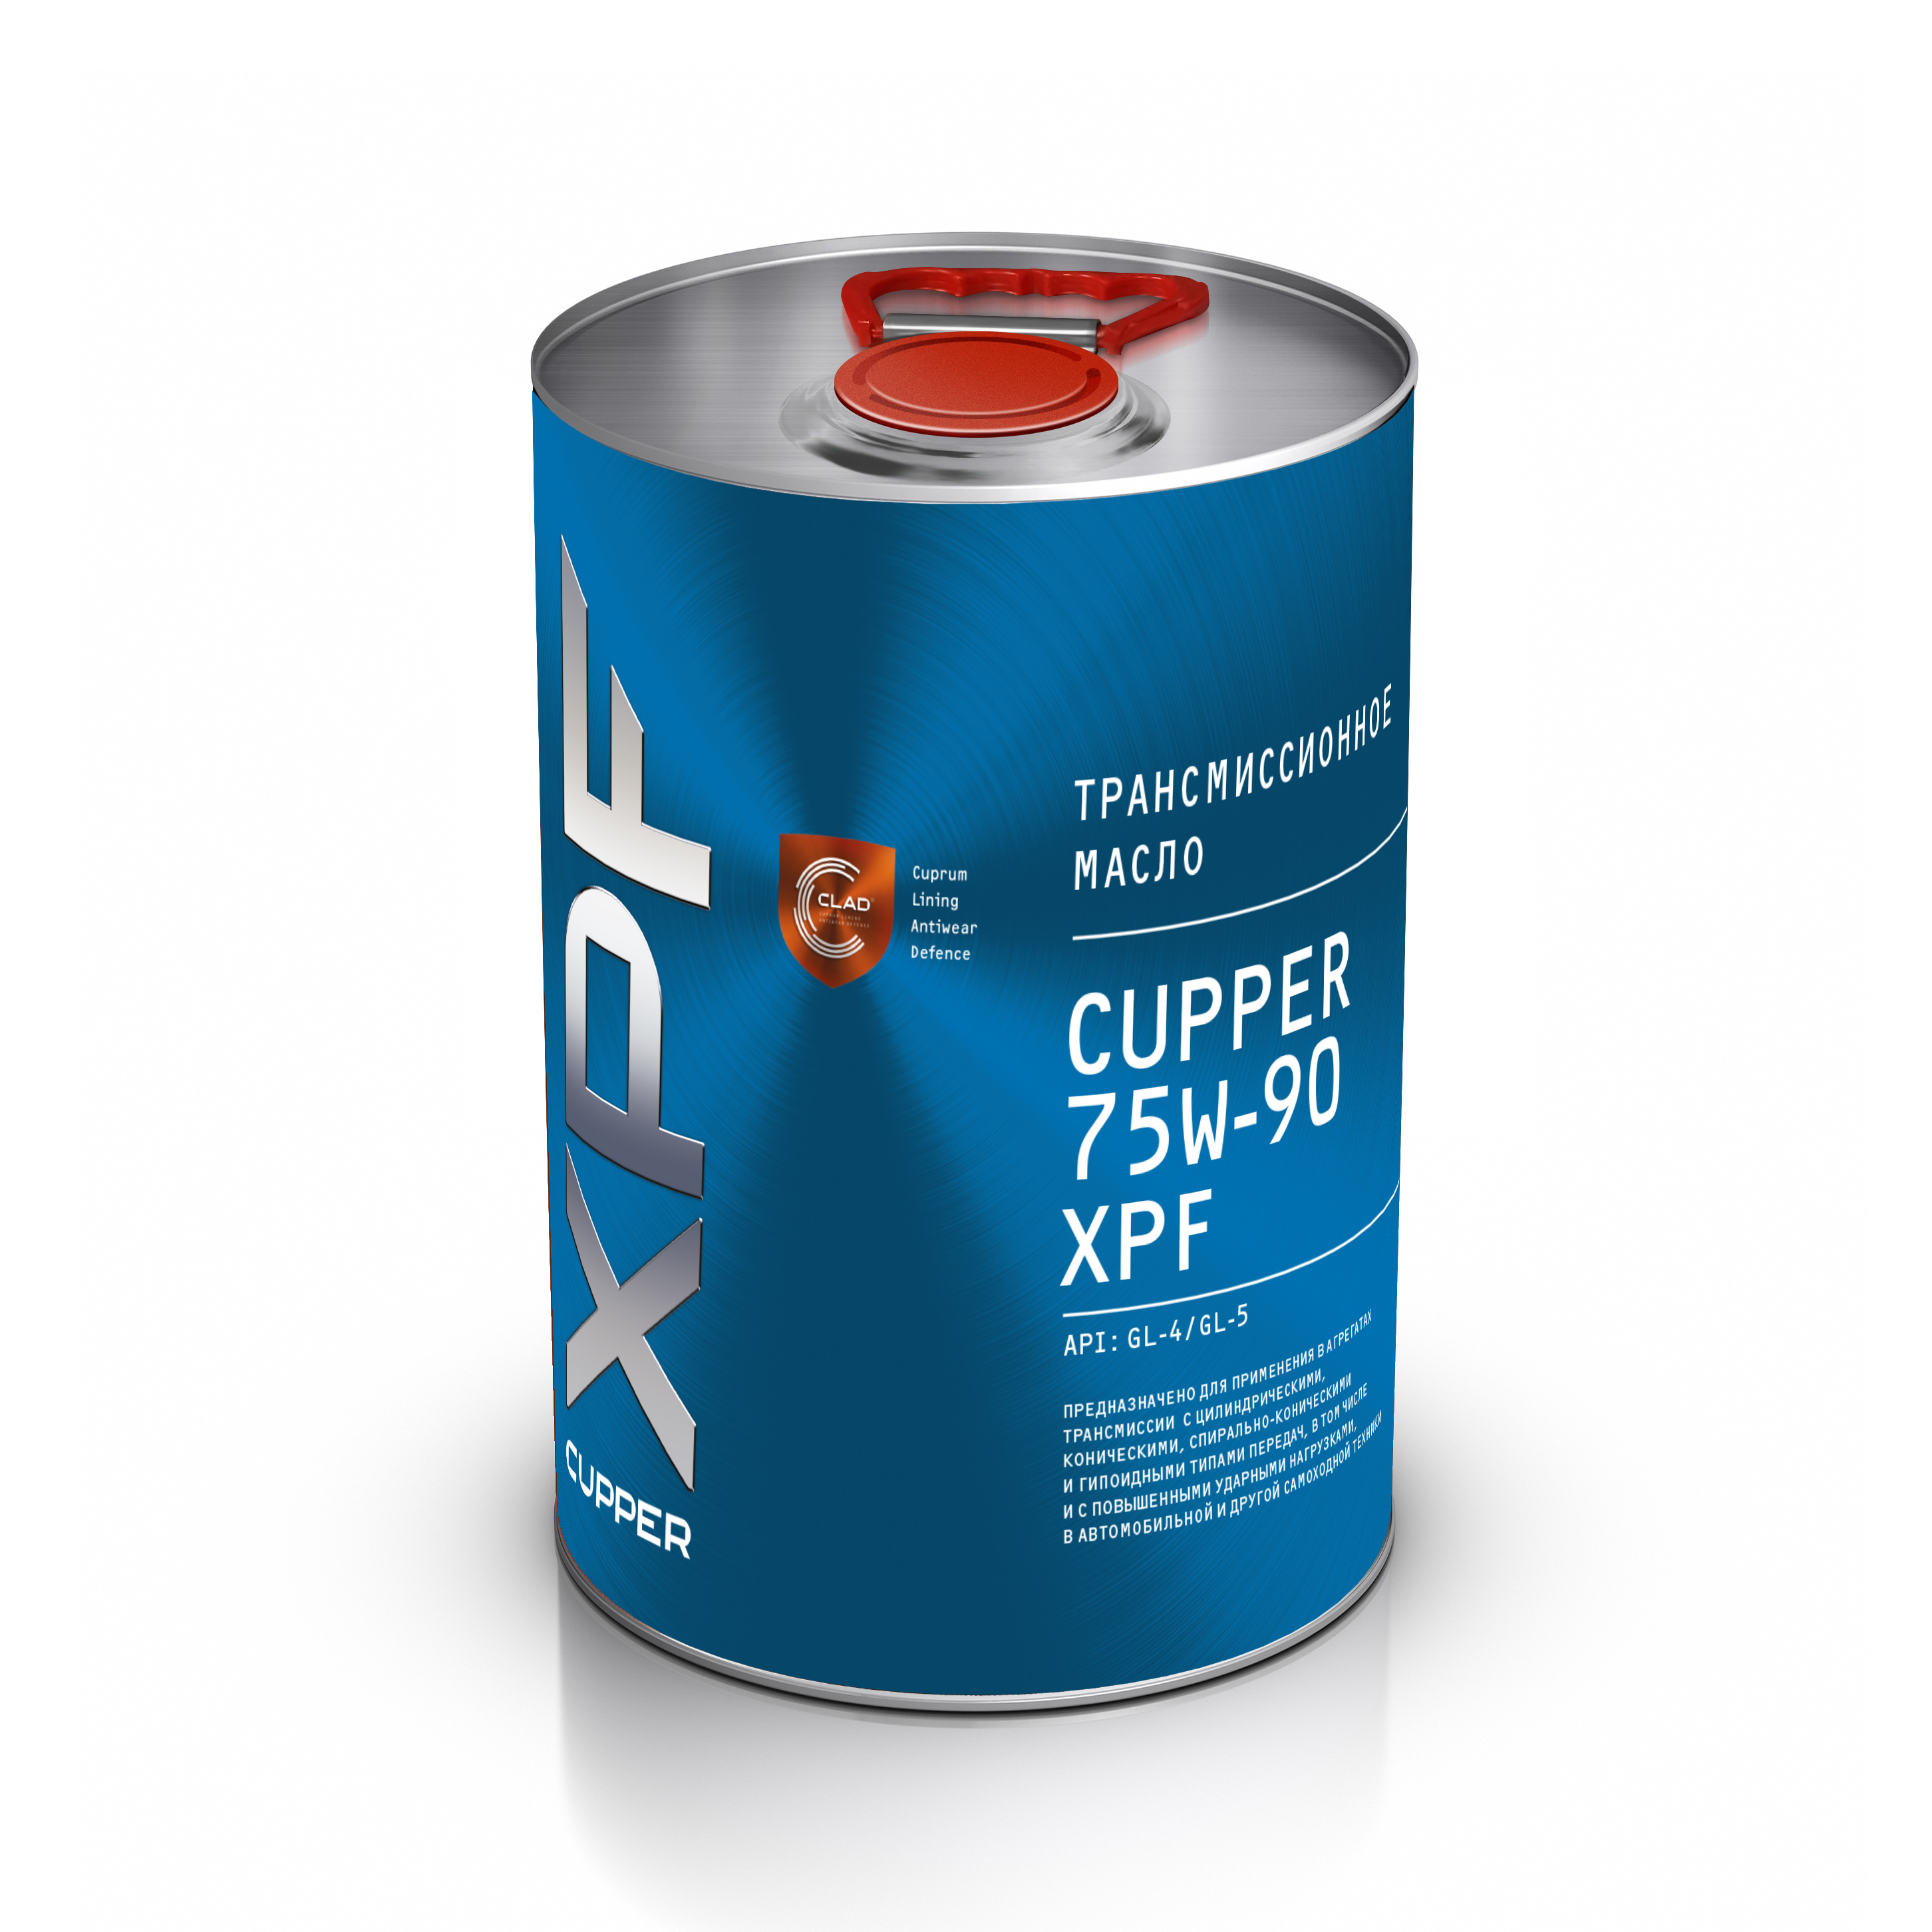 xypexパッチNプラグ - 1